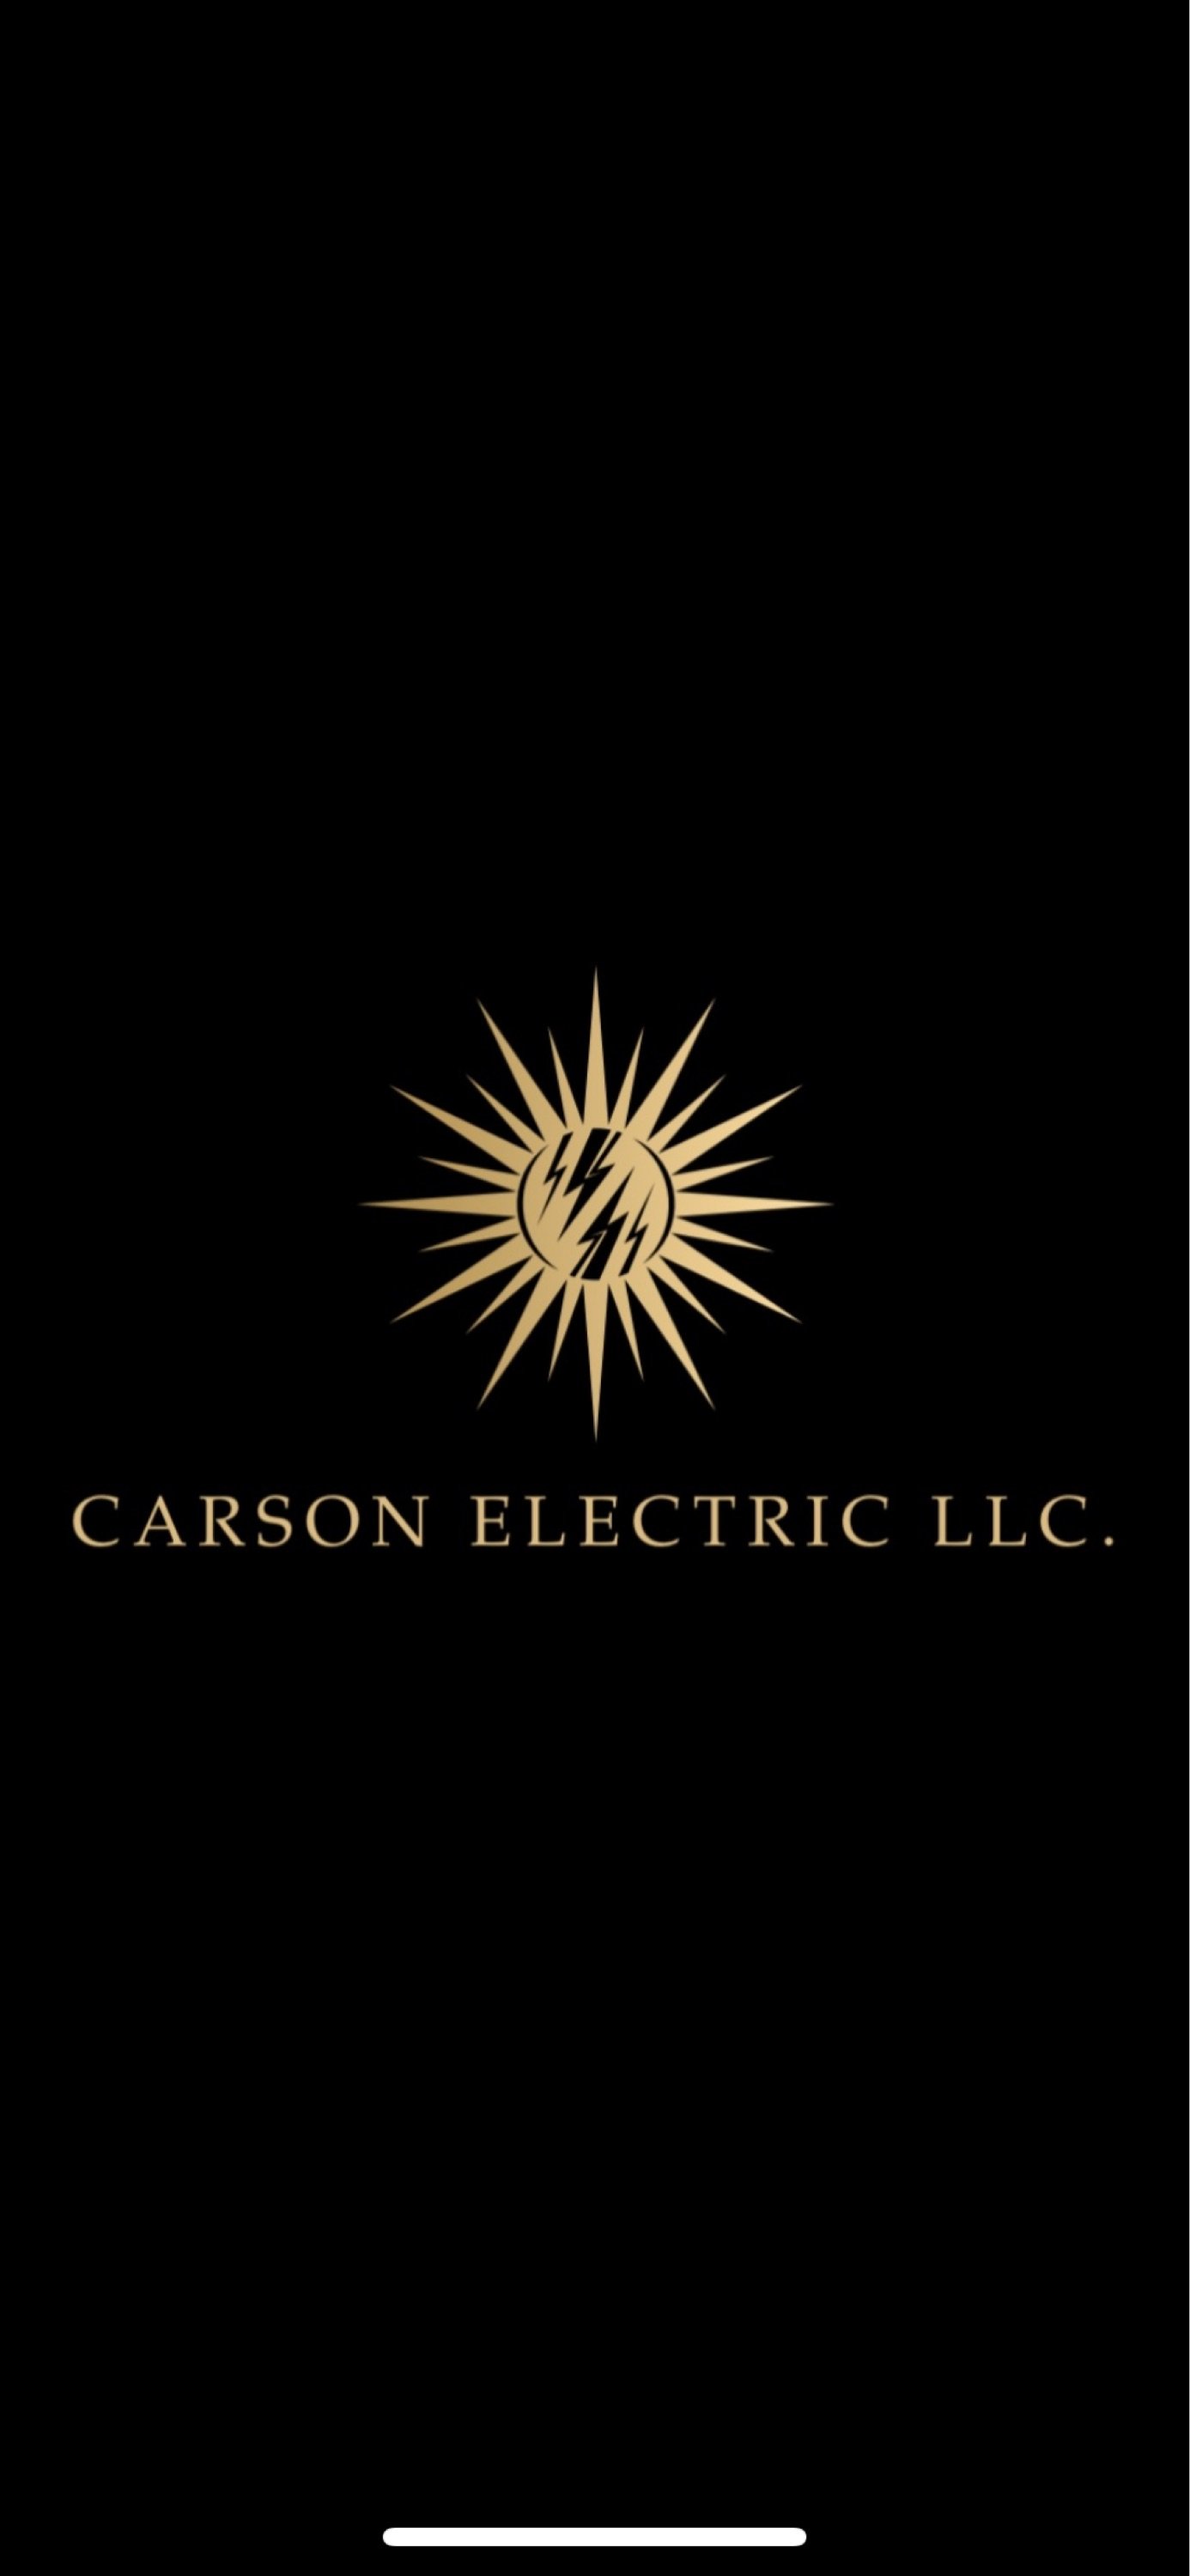 Carson Electric LLC Logo